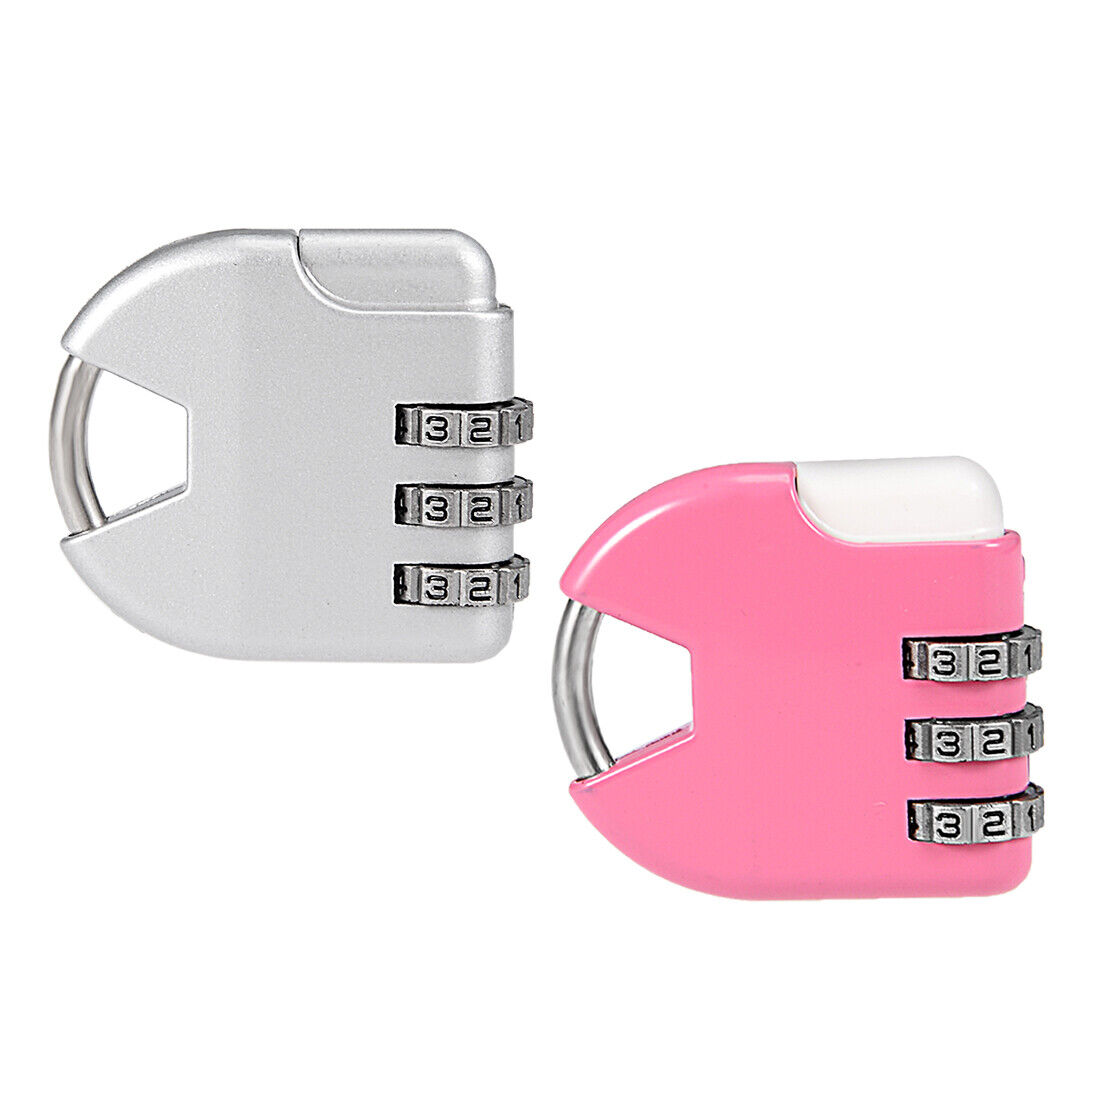 2pcs 3 Digit Combination Padlock 3.2mm Shackle Zinc Alloy Lock, Silver Tone,Pink